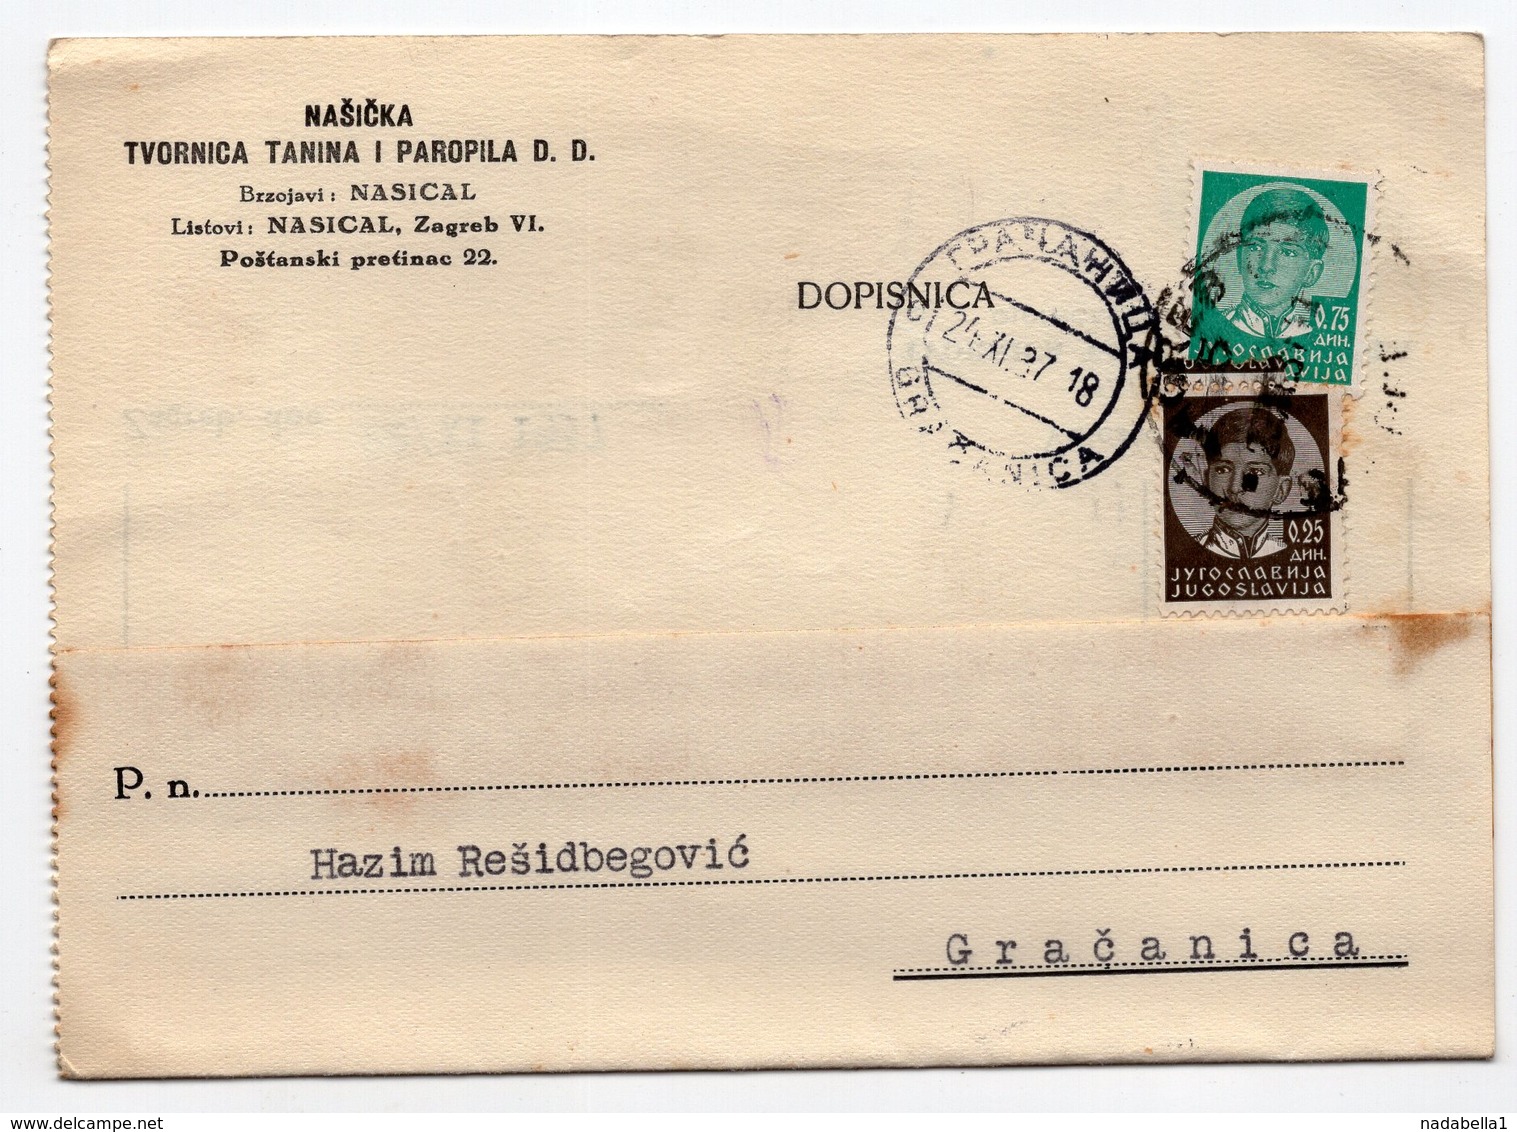 1937 YUGOSLAVIA, CROATIA, ZAGREB, GRACANICA, BOSNIA, CORRESPONDENCE CARD, NASICKA, TANNERY - Covers & Documents